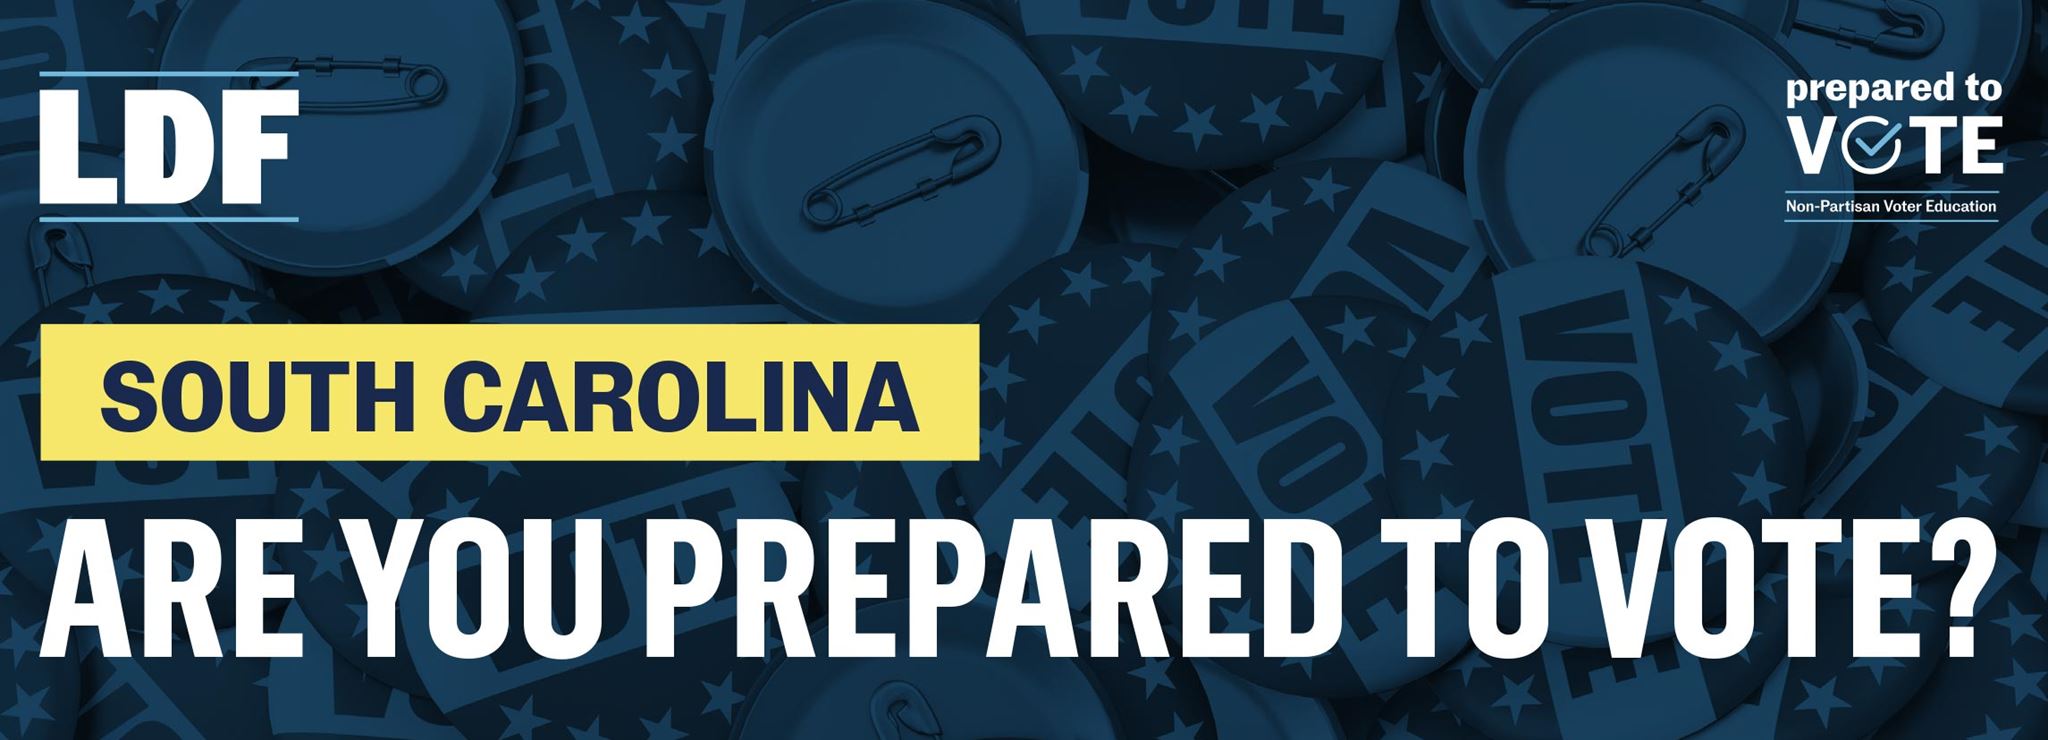 South Carolina: Are you prepared to vote?